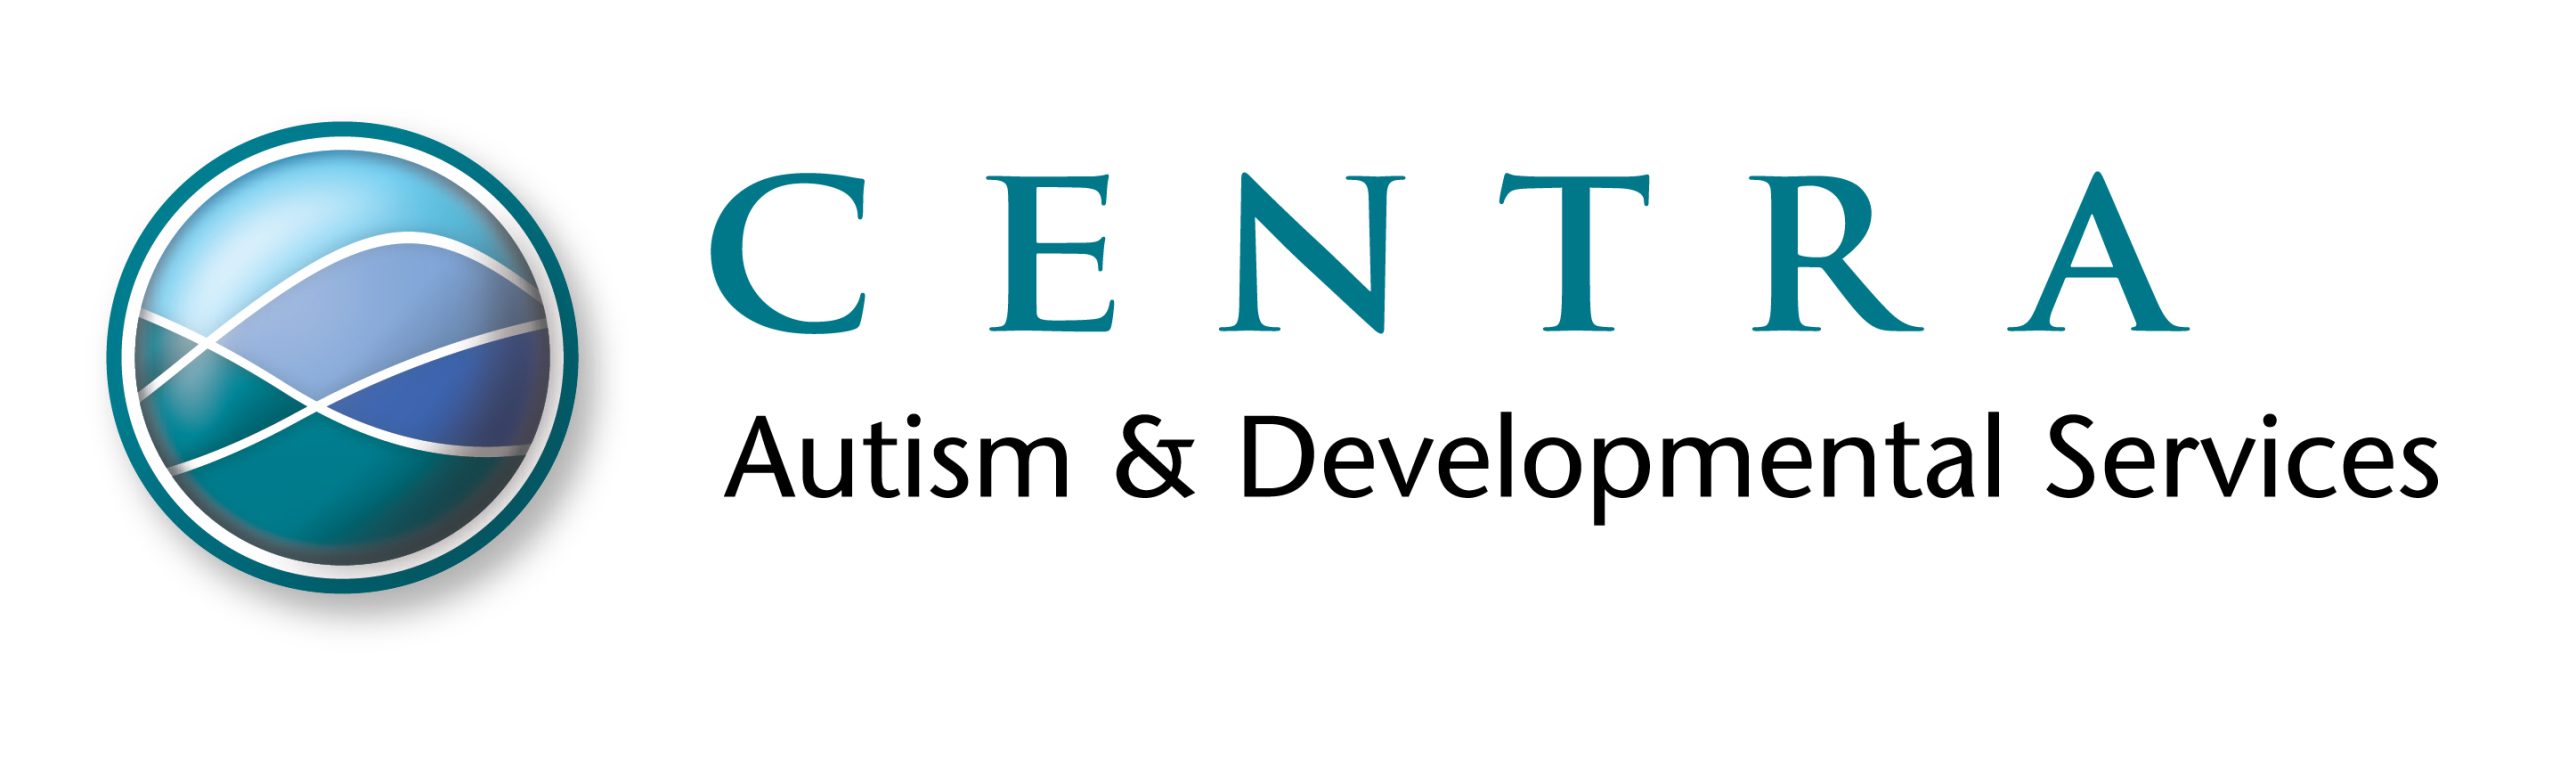 Centra Health Autism & Developmental Services